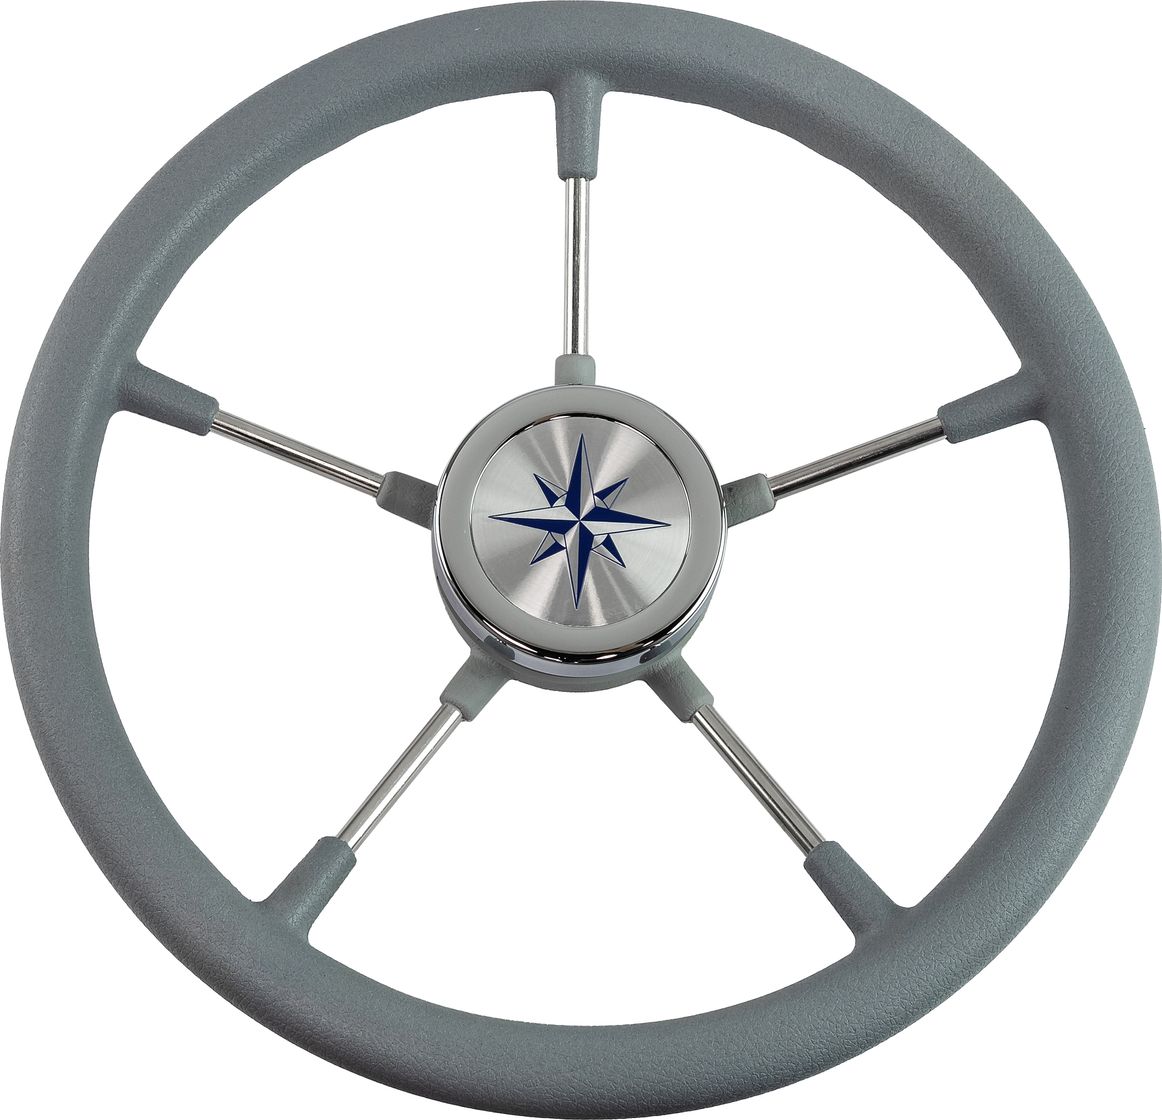 Рулевое колесо RIVA RSL обод серый, спицы серебряные д. 360 мм VN735022-03 рулевое колесо riva rsl обод спицы серебряные д 320 мм vn732022 01